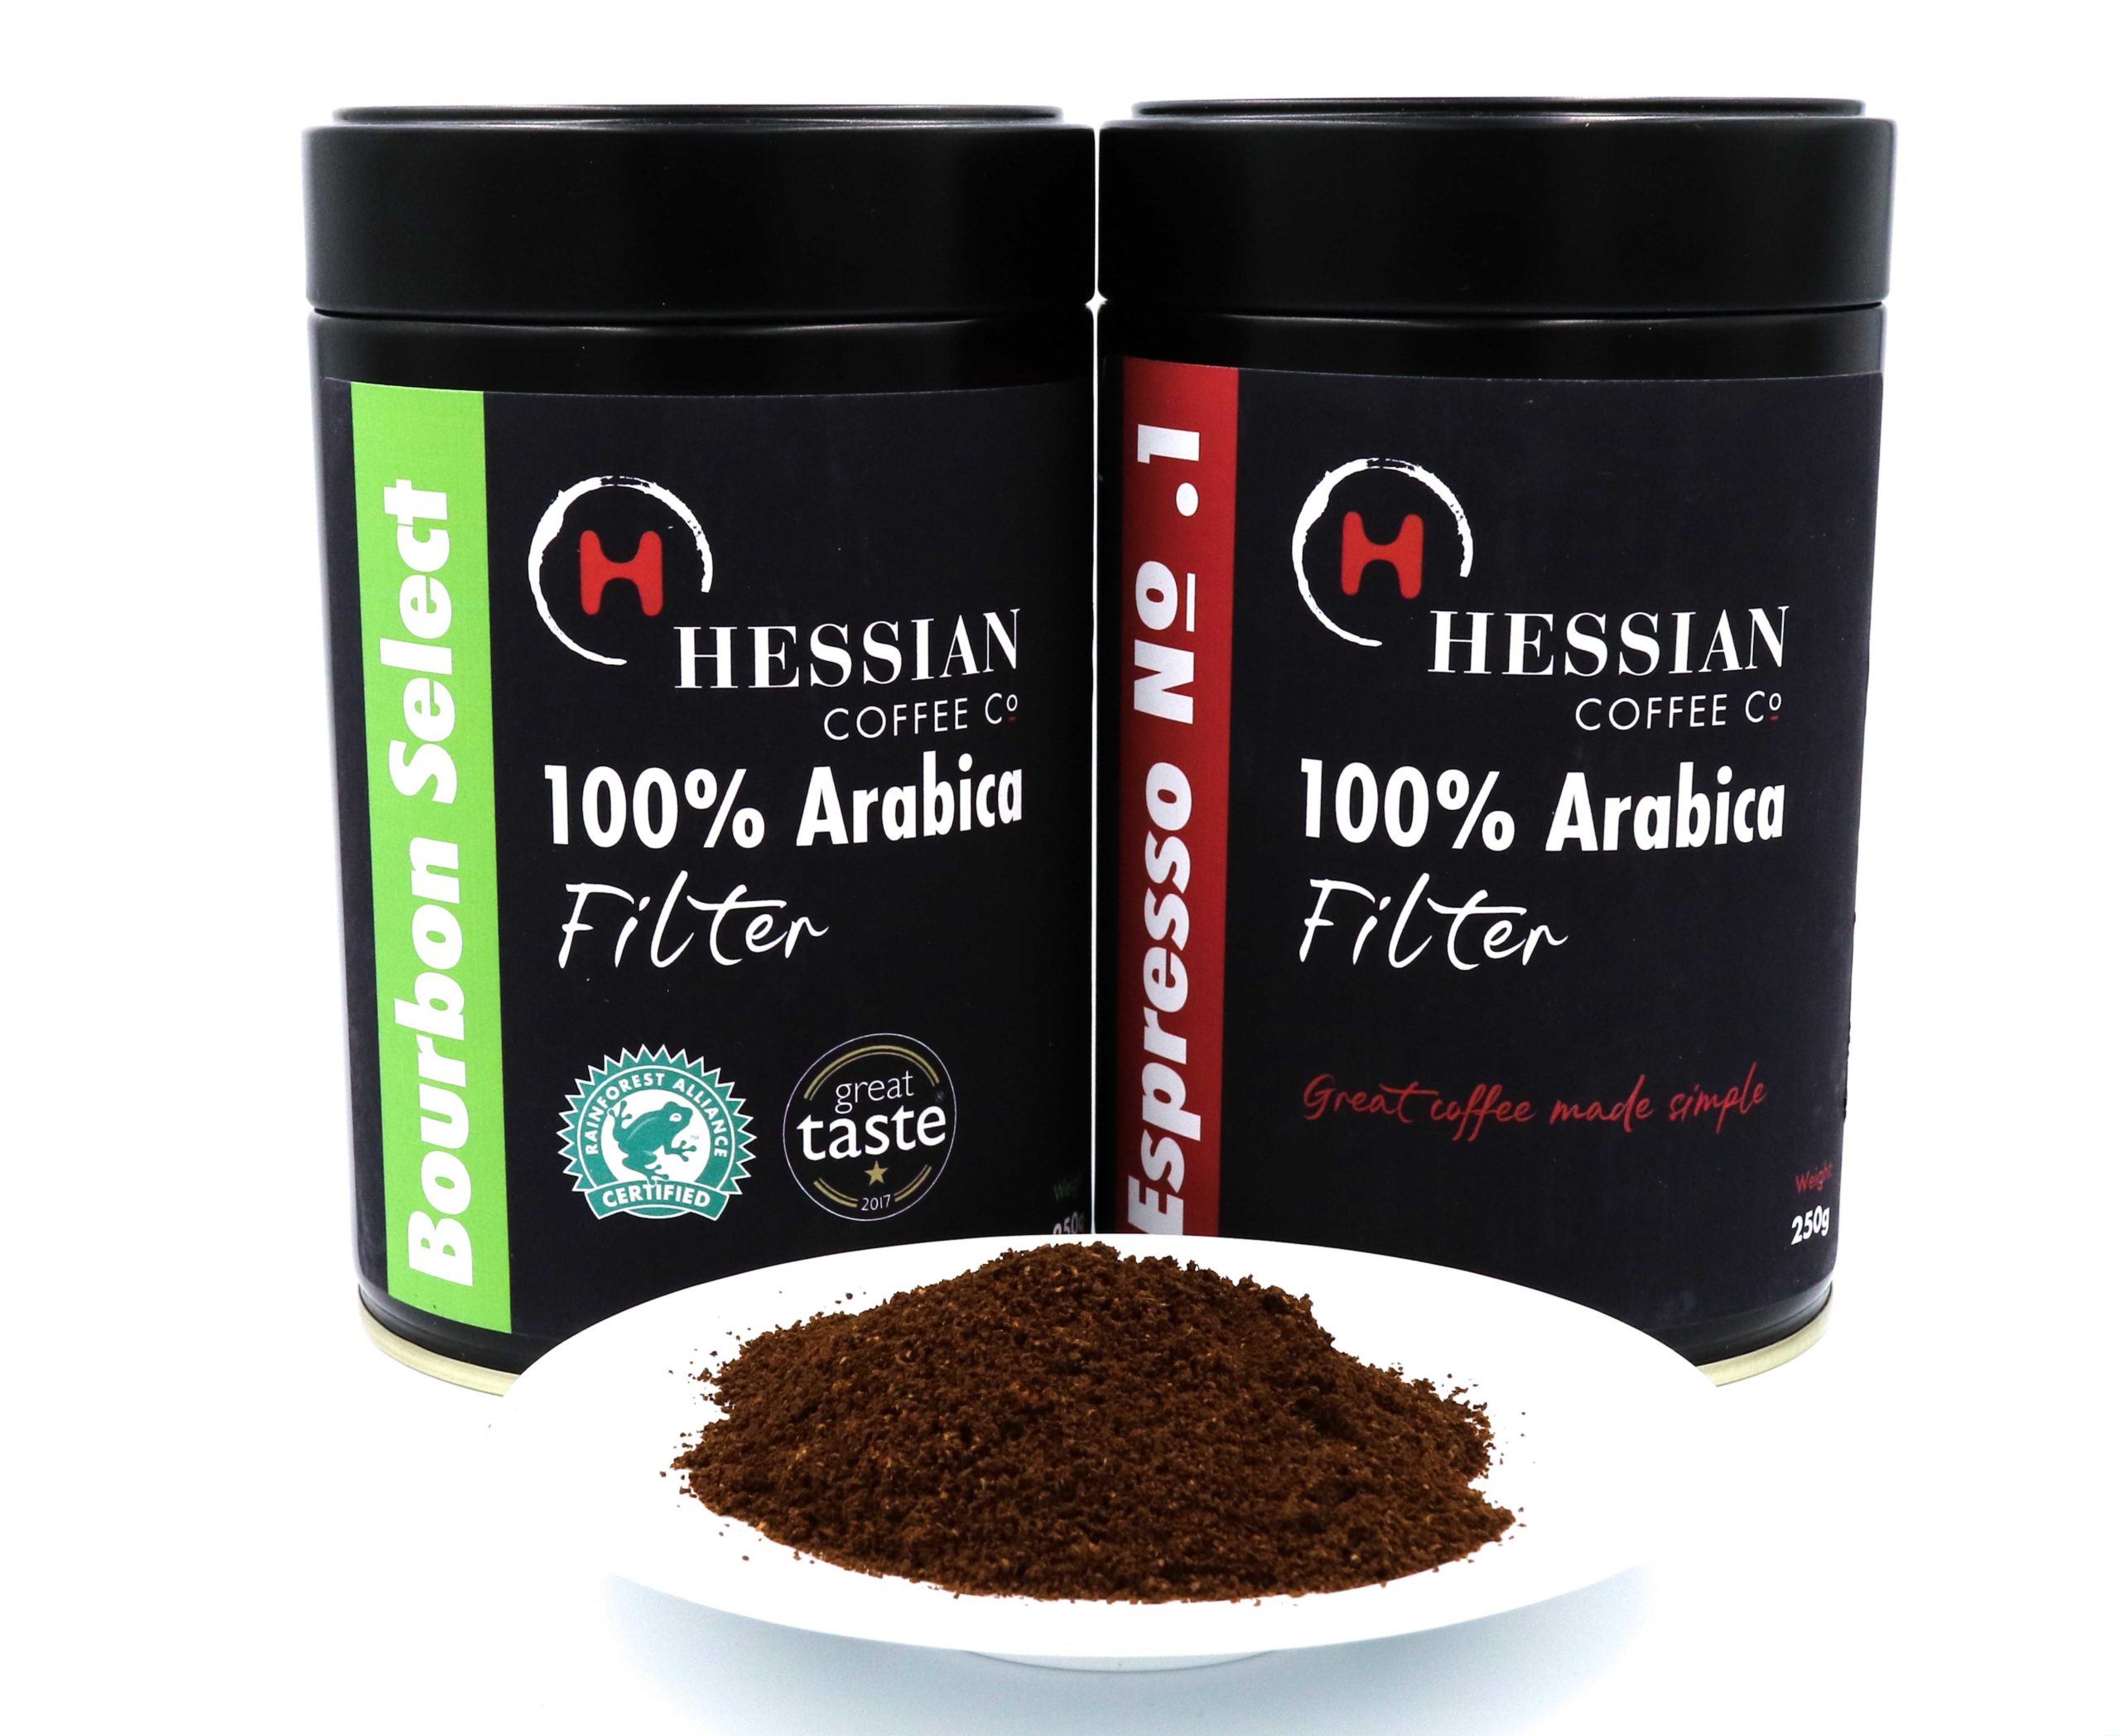 Hessian Retain coffee tins